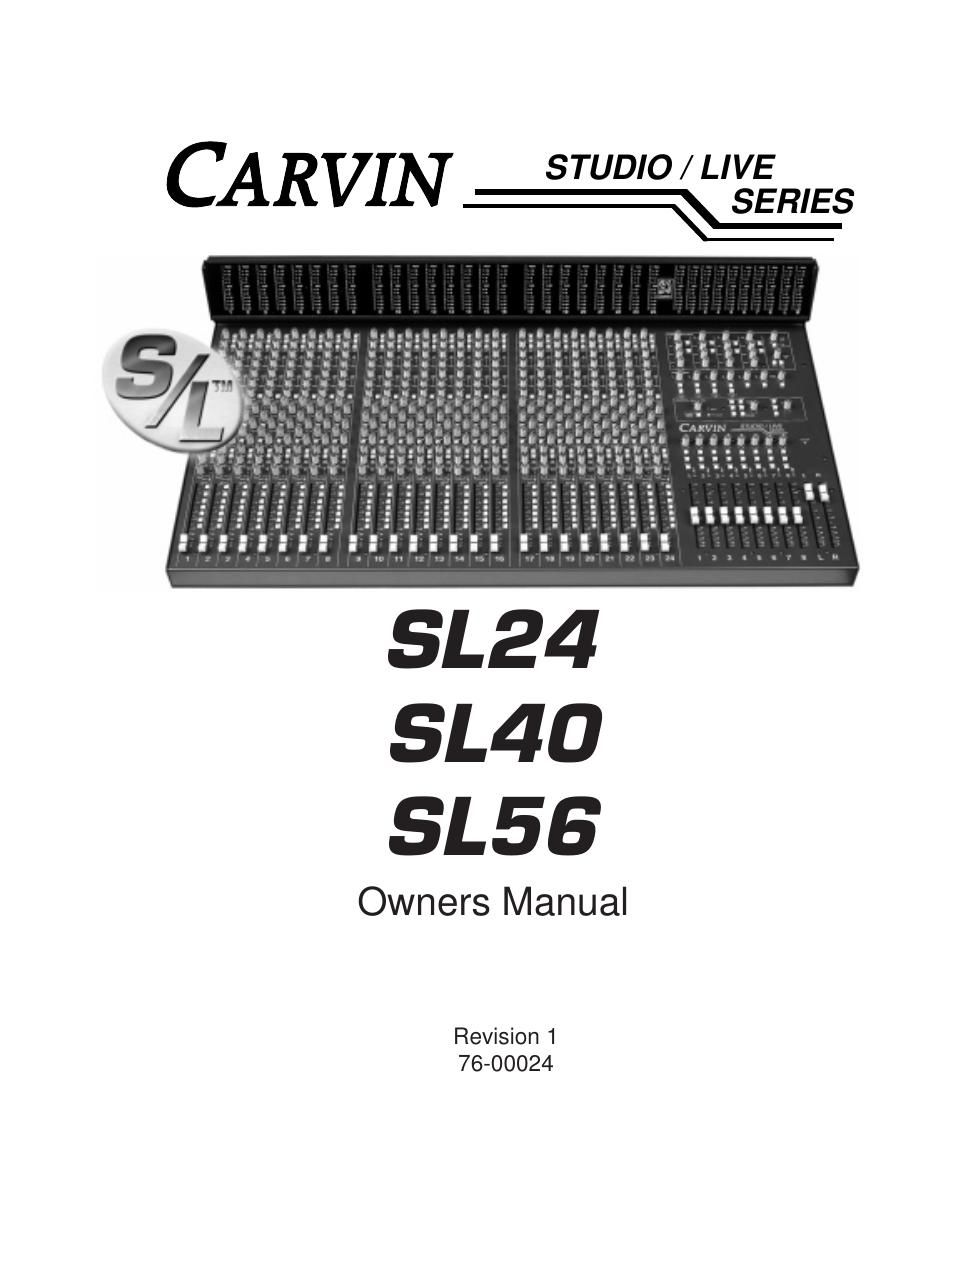 carvin studio live manual schematics